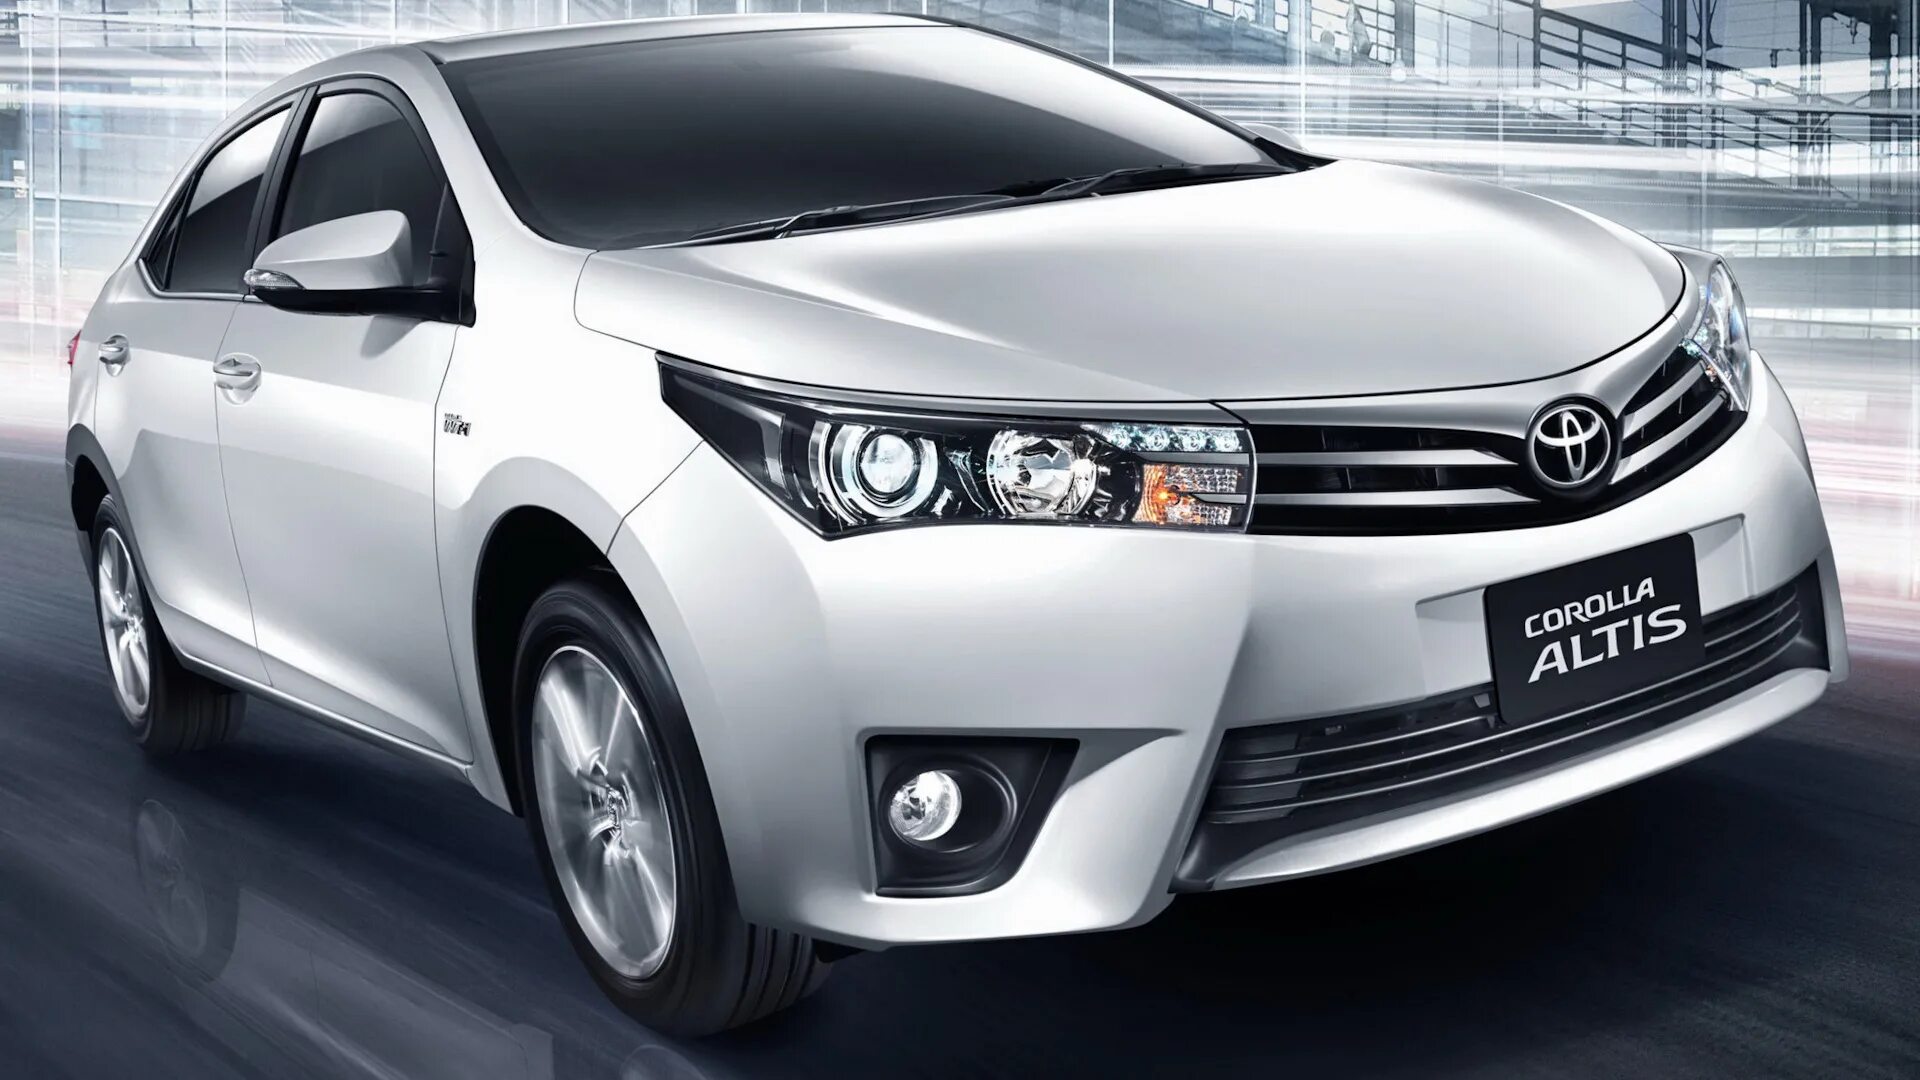 Тойота королла производитель. Toyota Corolla 2013. Тойота Королла 2013. Toyota Королла 2013. Тойота Королла 2013 года.